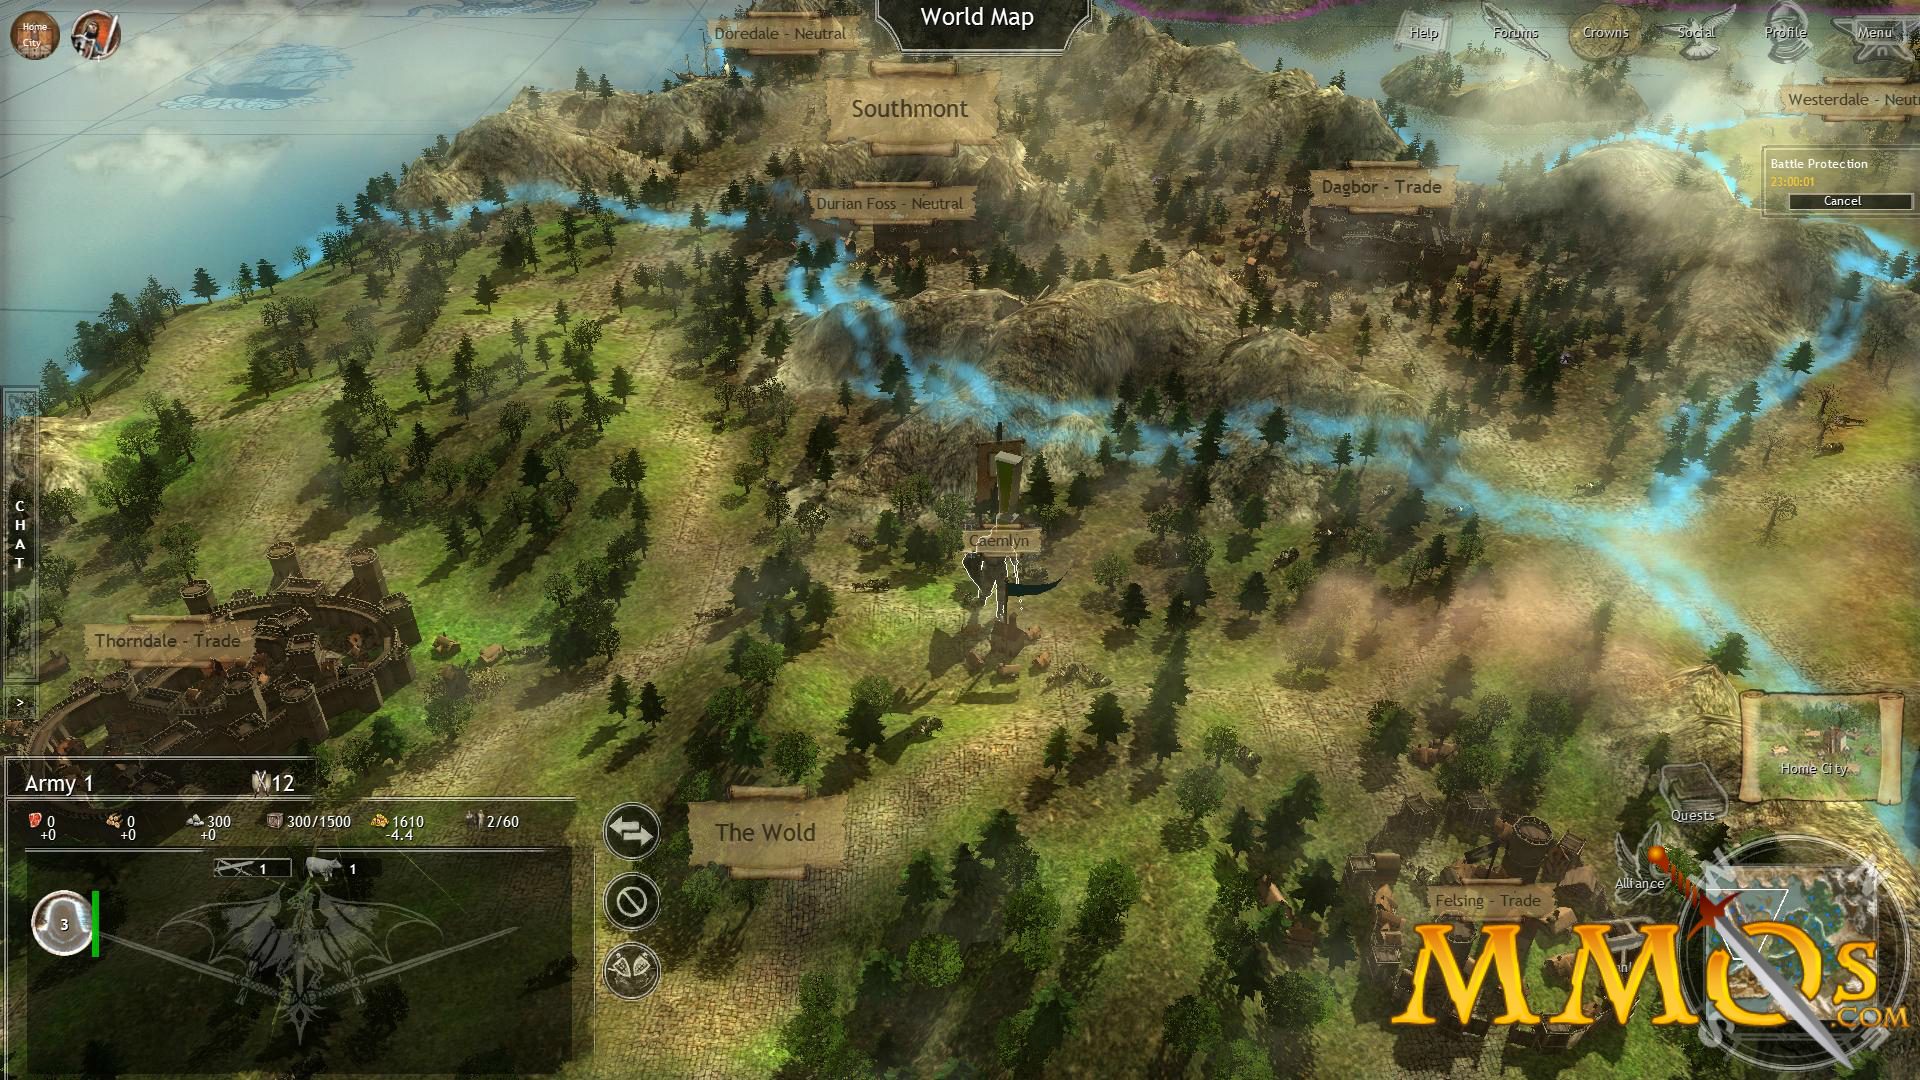 World Warfare-3D MMO Wargame Tips, Cheats, Vidoes and Strategies